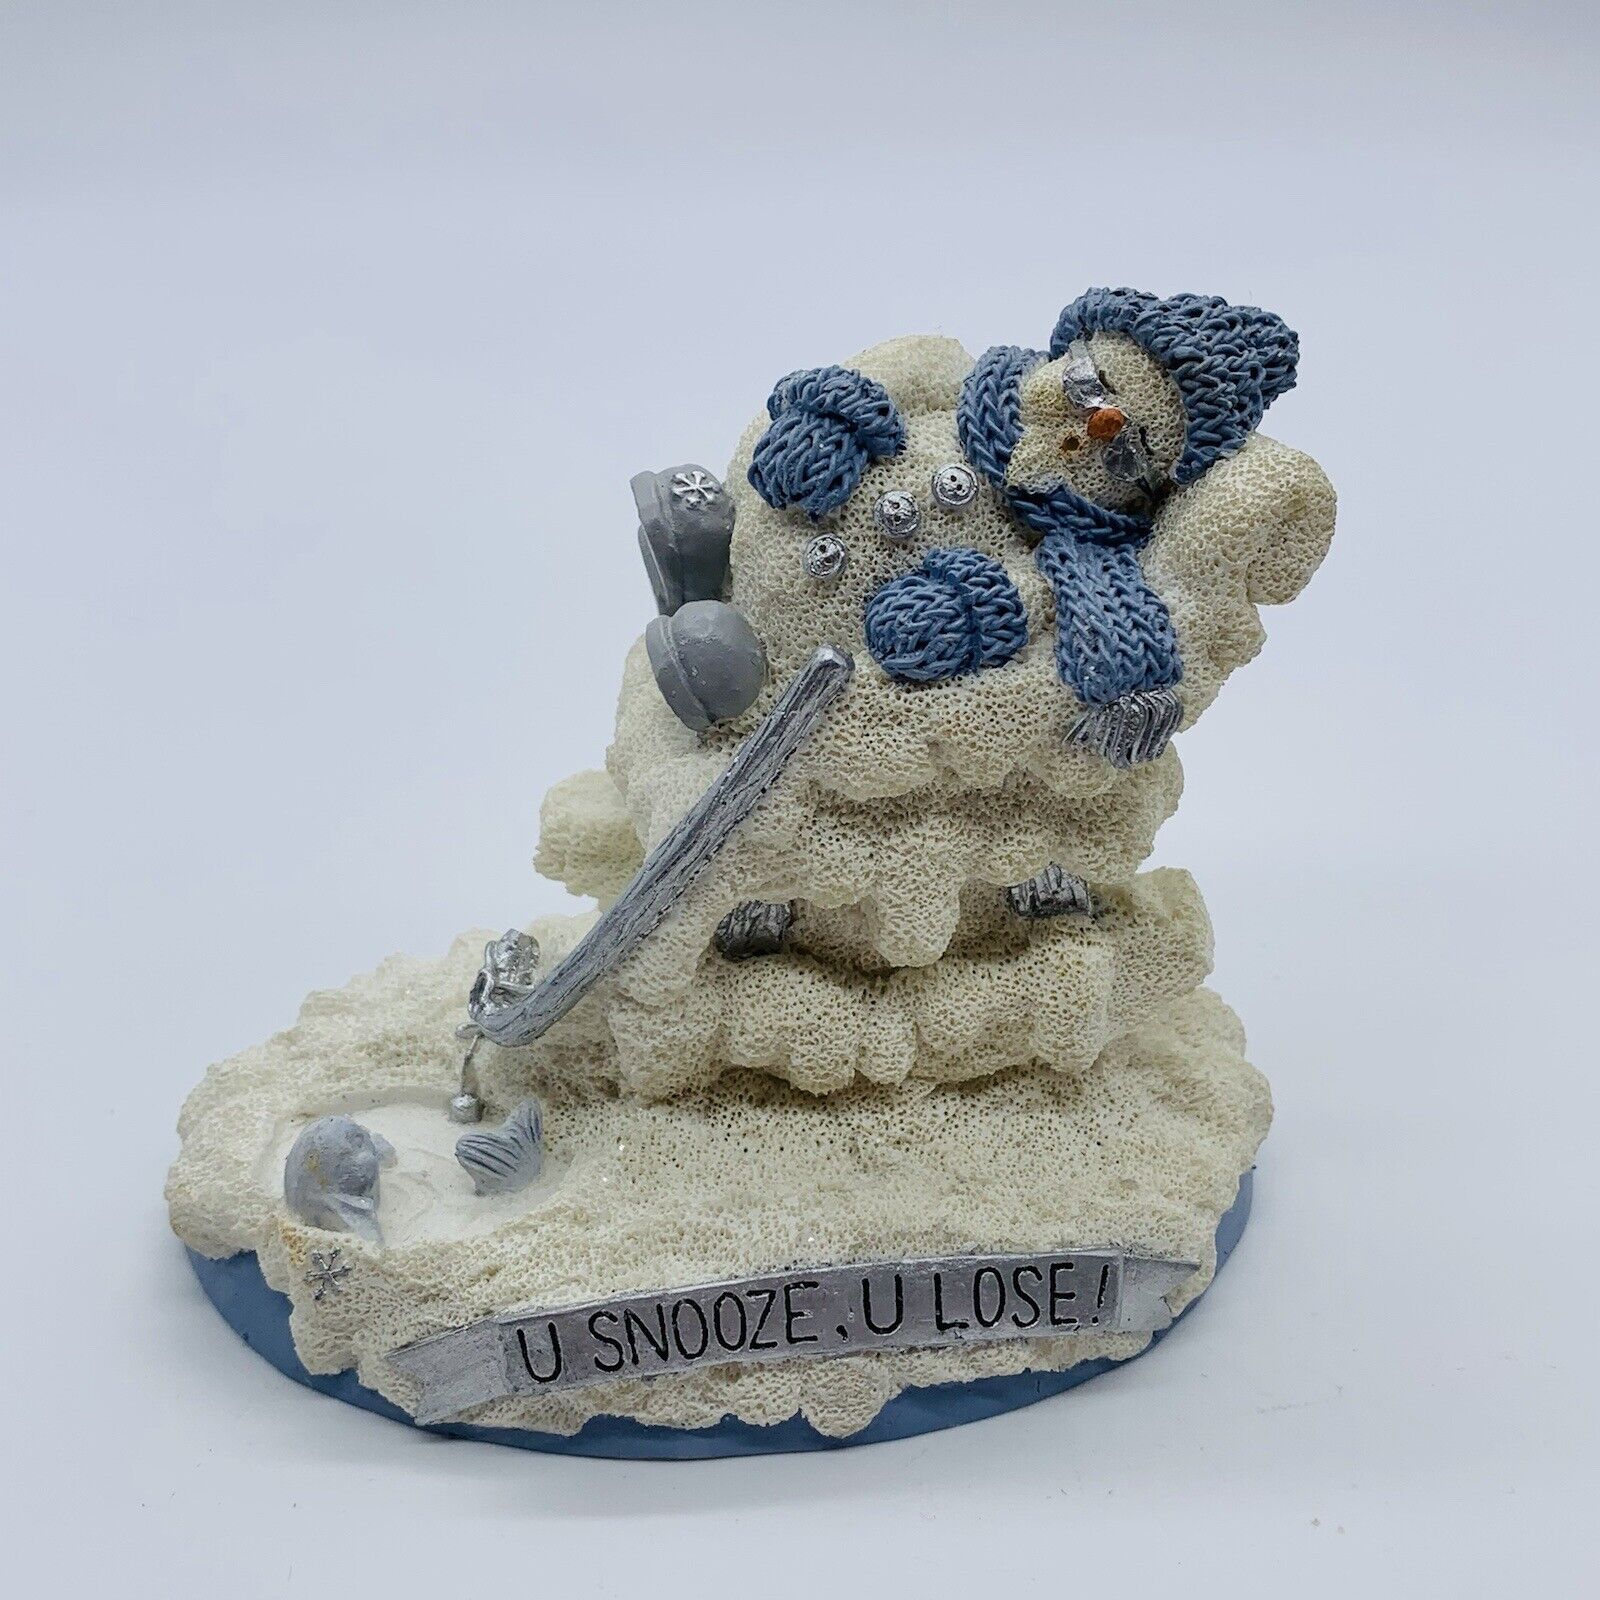 The Encore Group Snowbuddies Snowman “U Snooze U Loose” Figurine 3”T 4.5”W